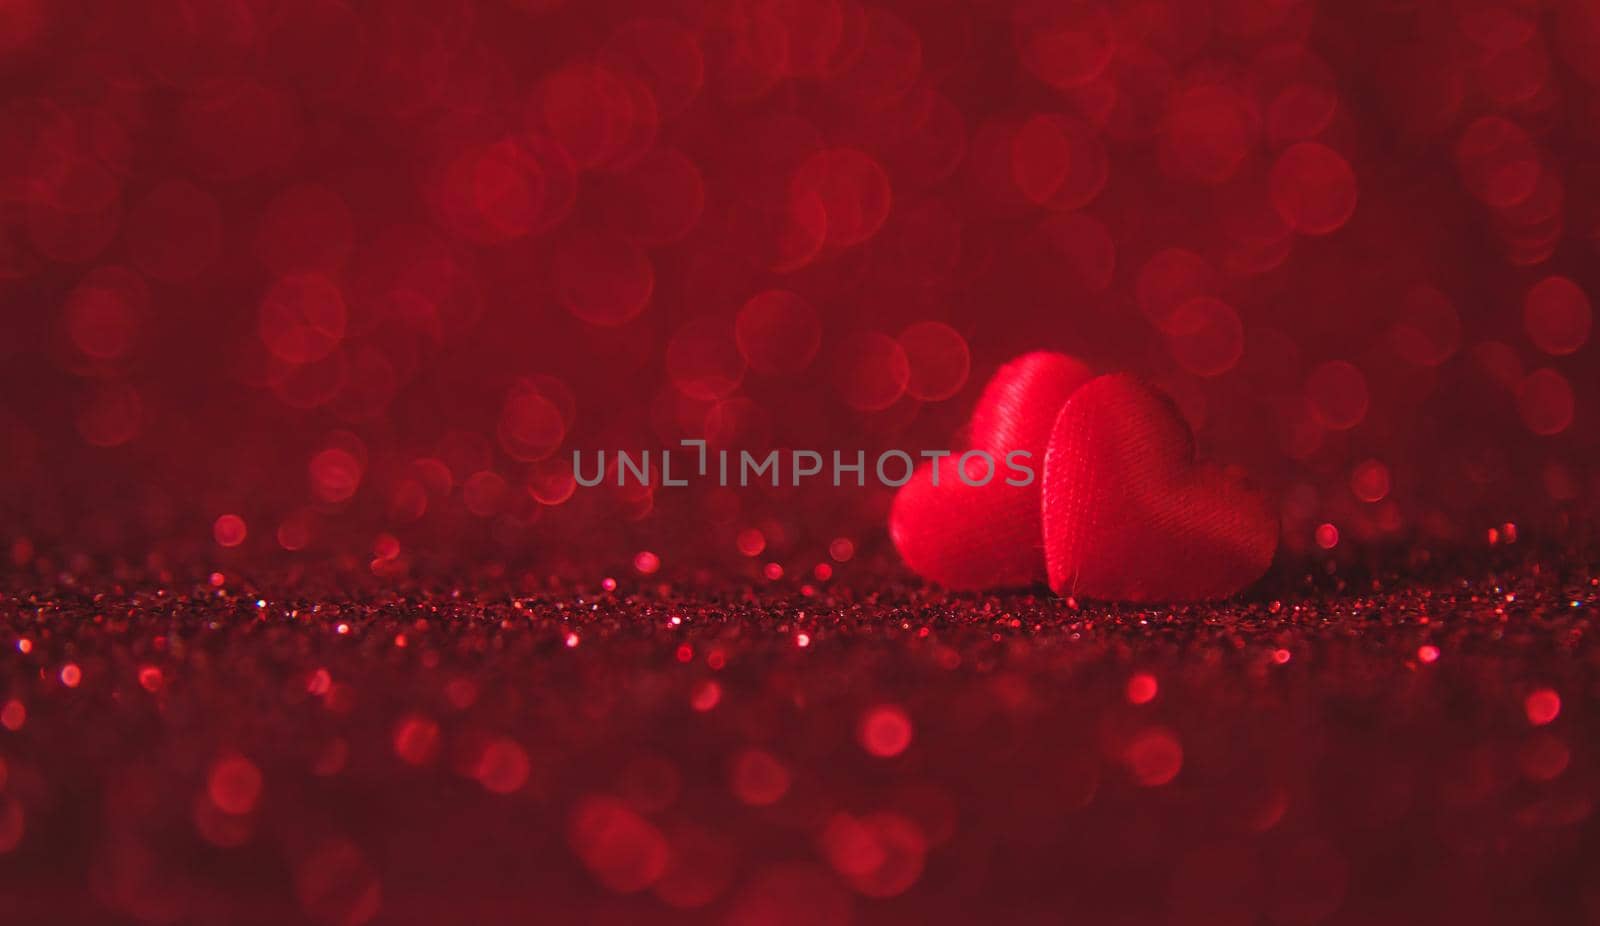 Shiny background with valentine heart. Selective focus. by yanadjana